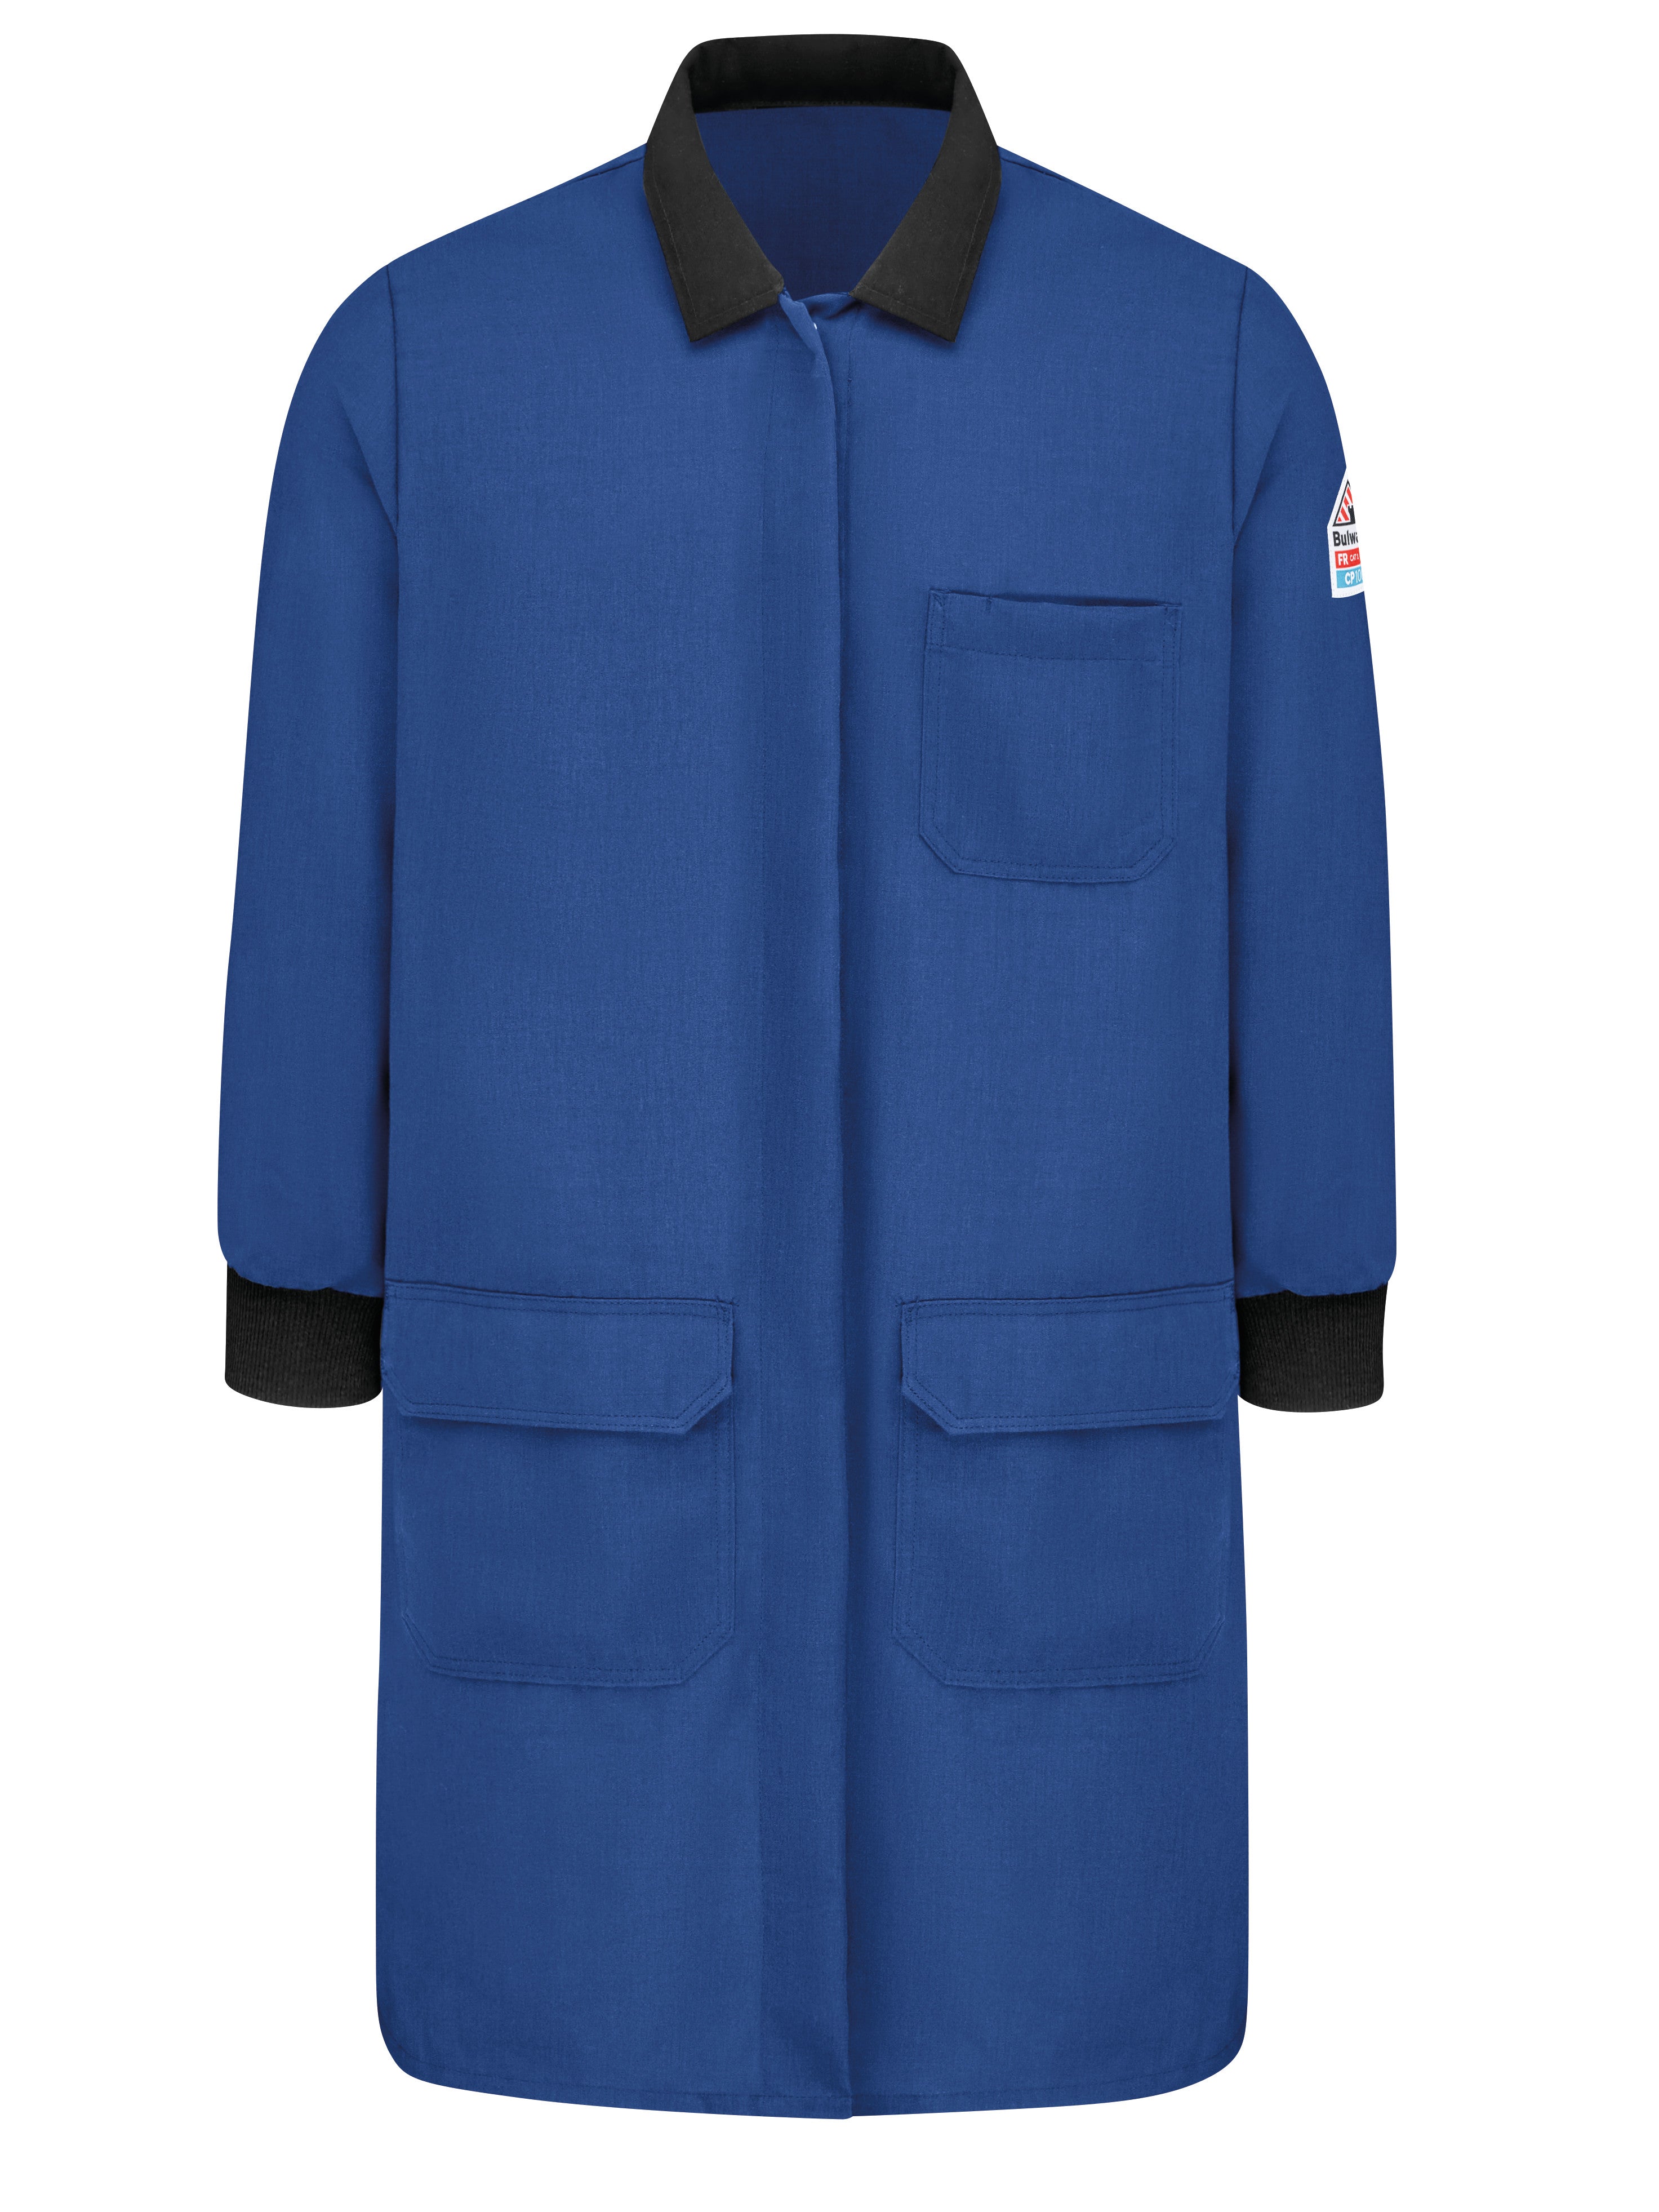 Coverings - Lab Coat KNR3 - Royal Blue